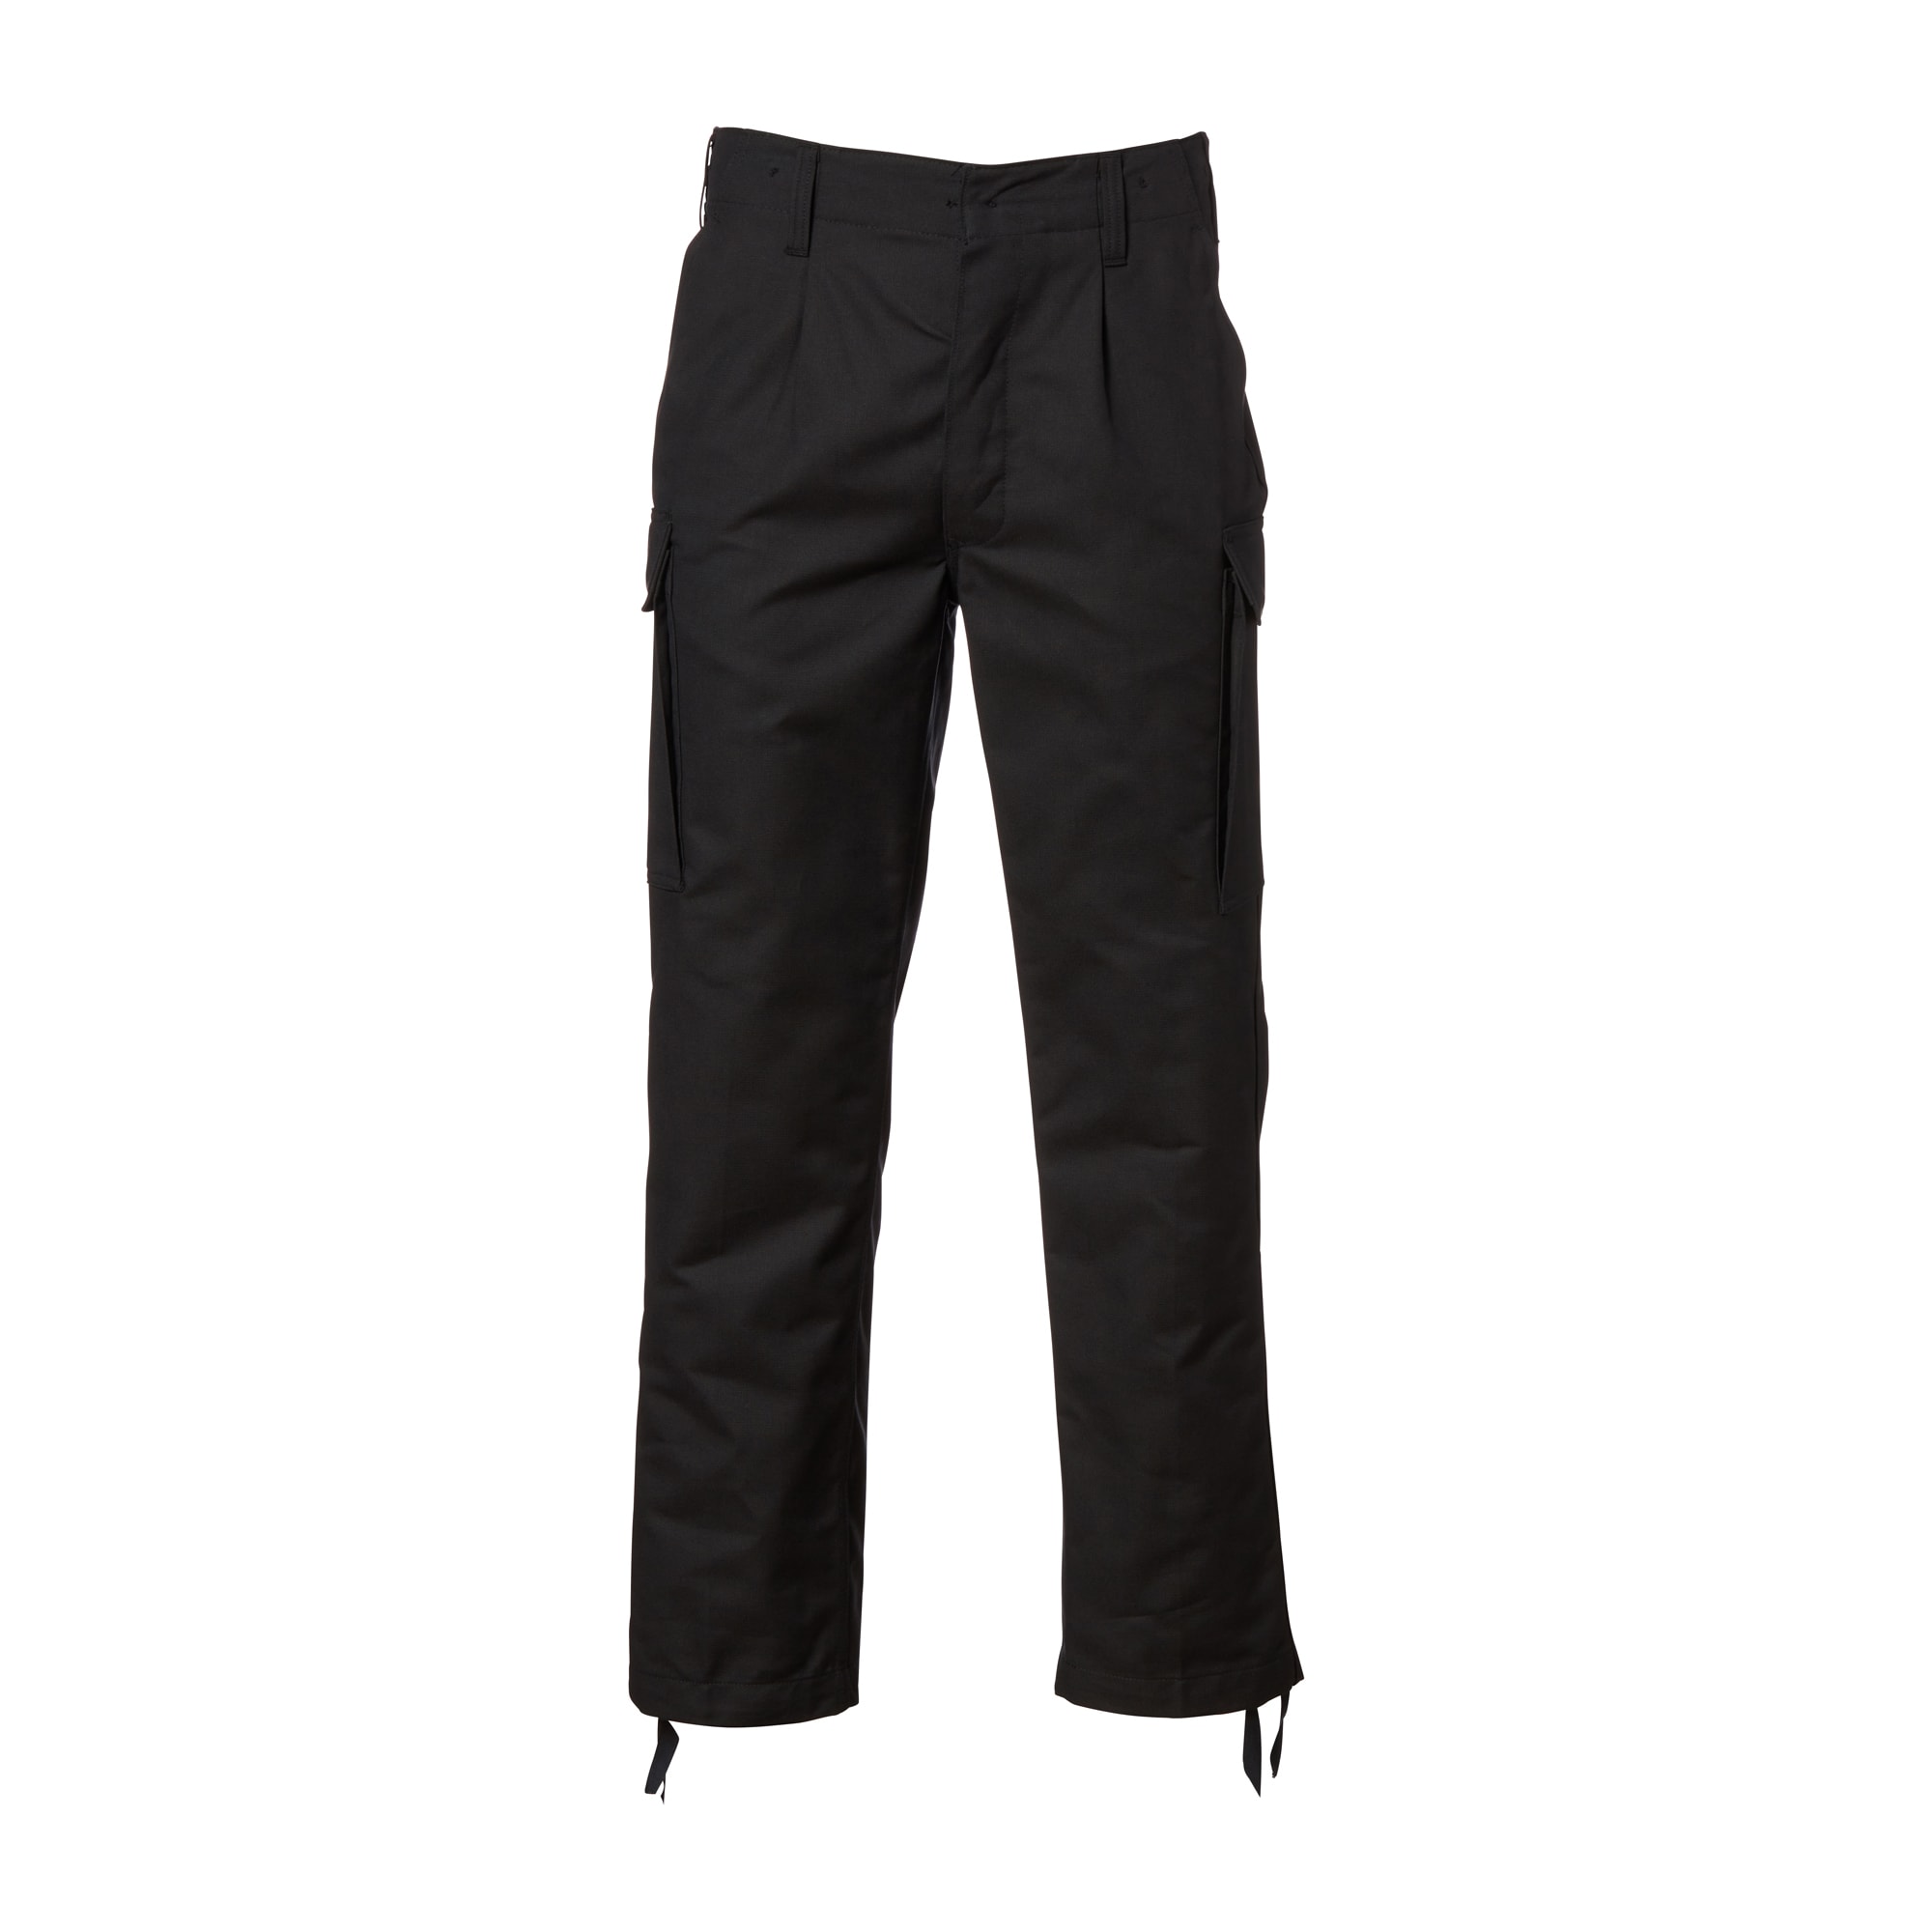 Purchase the Leo Köhler Field Pants black by ASMC